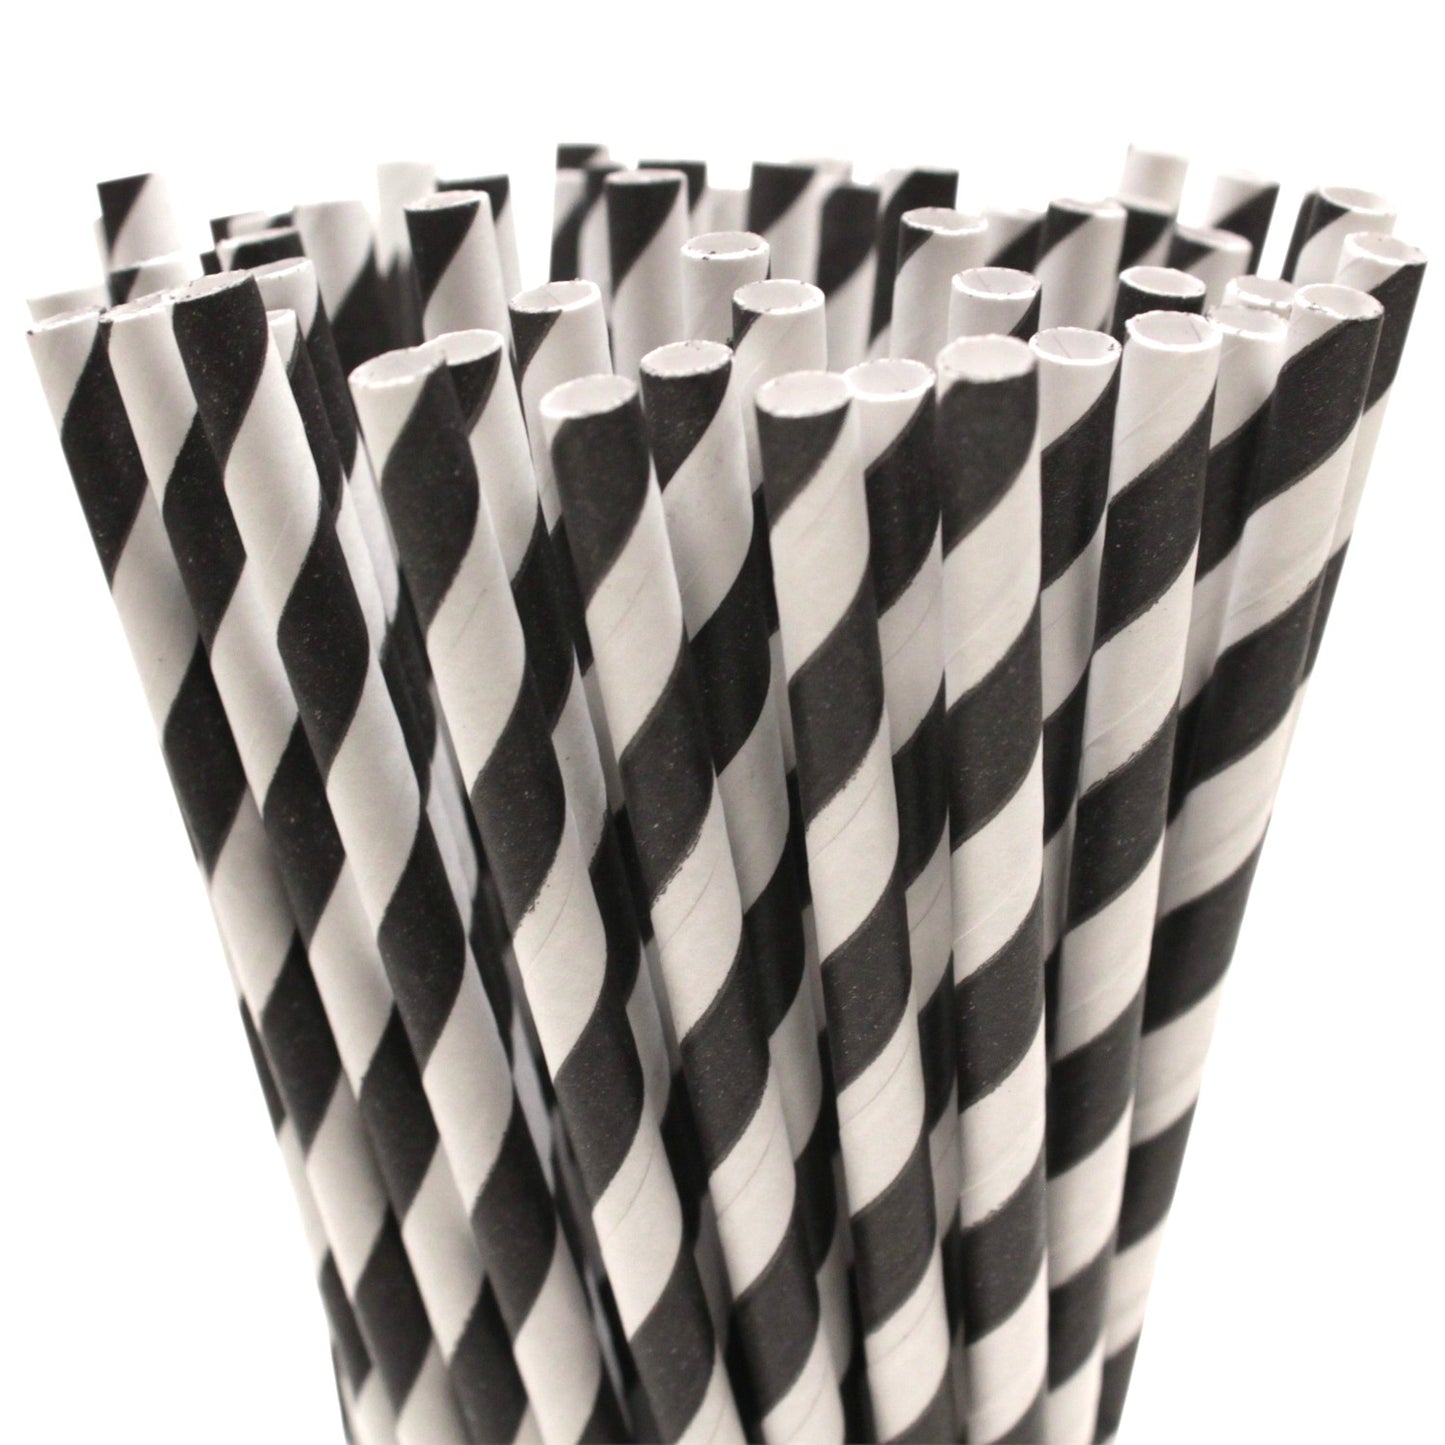 Black & White Striped Paper Straws (6mm x 200mm) - Quality Drinking Straws - Intrinsic Paper Straws